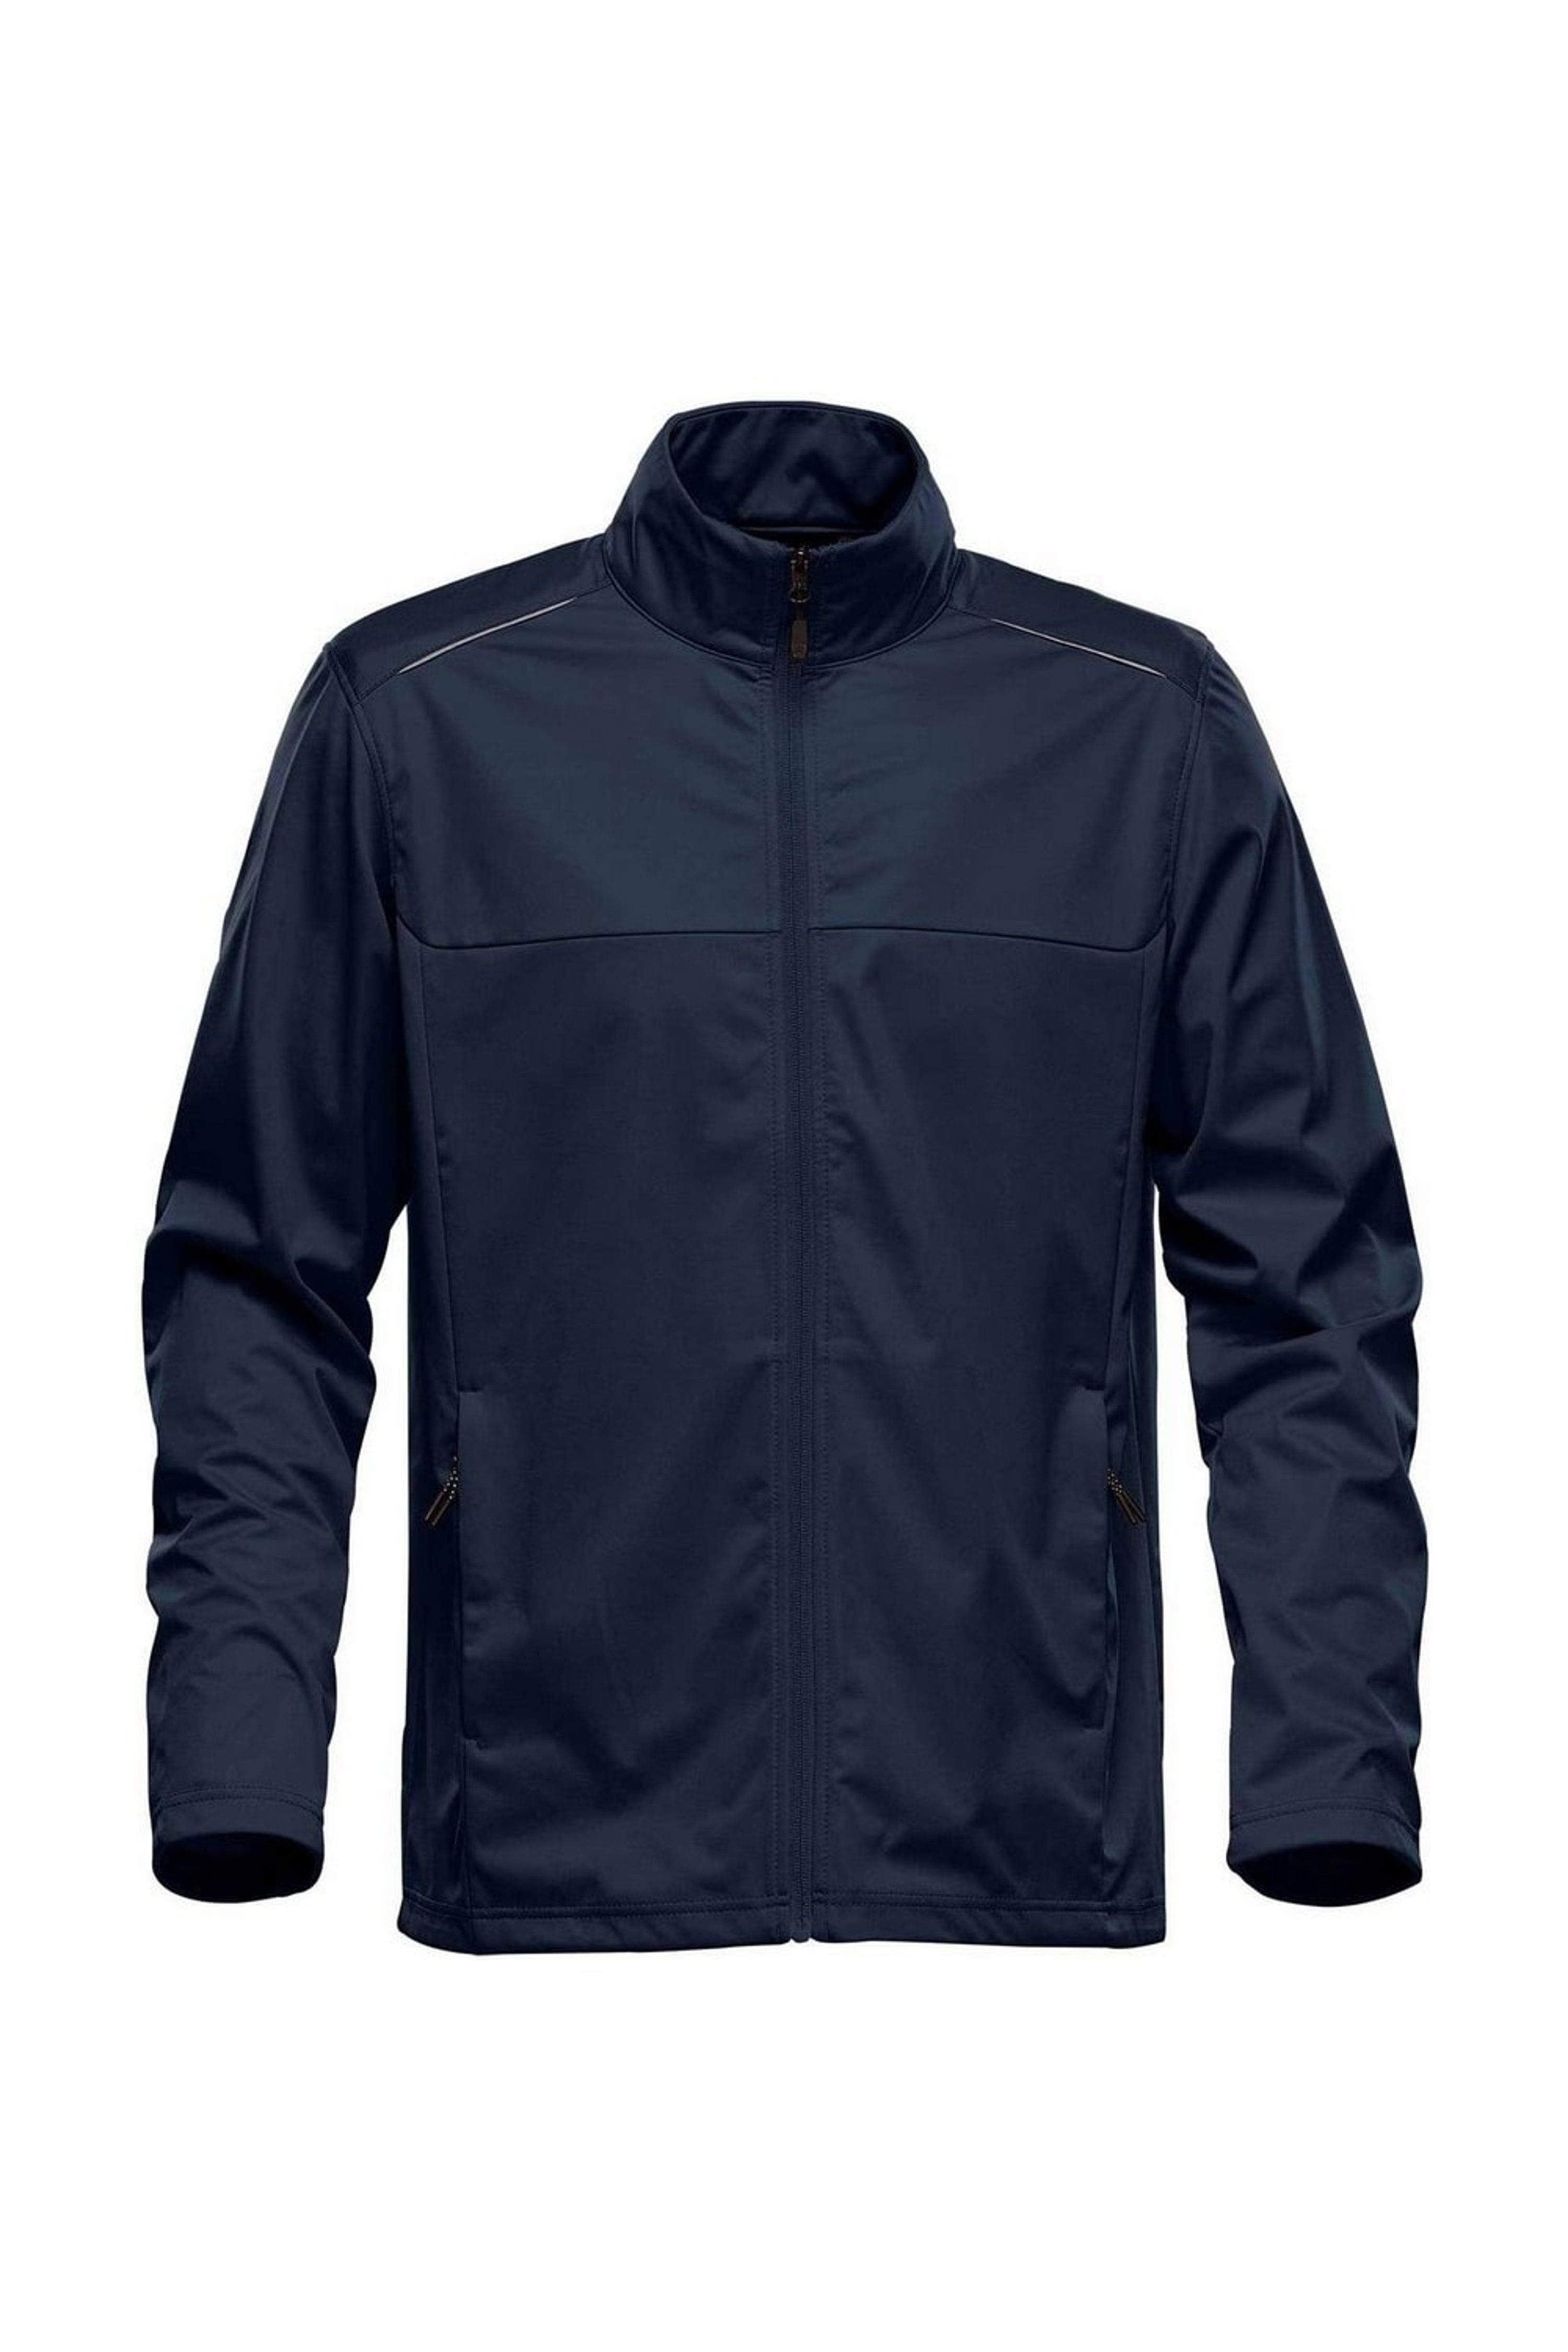 Stormtech Mens Greenwich Lightweight Softshell Jacket (Navy Blue) - L - Also in: 2XL, M, XL, S | Verishop